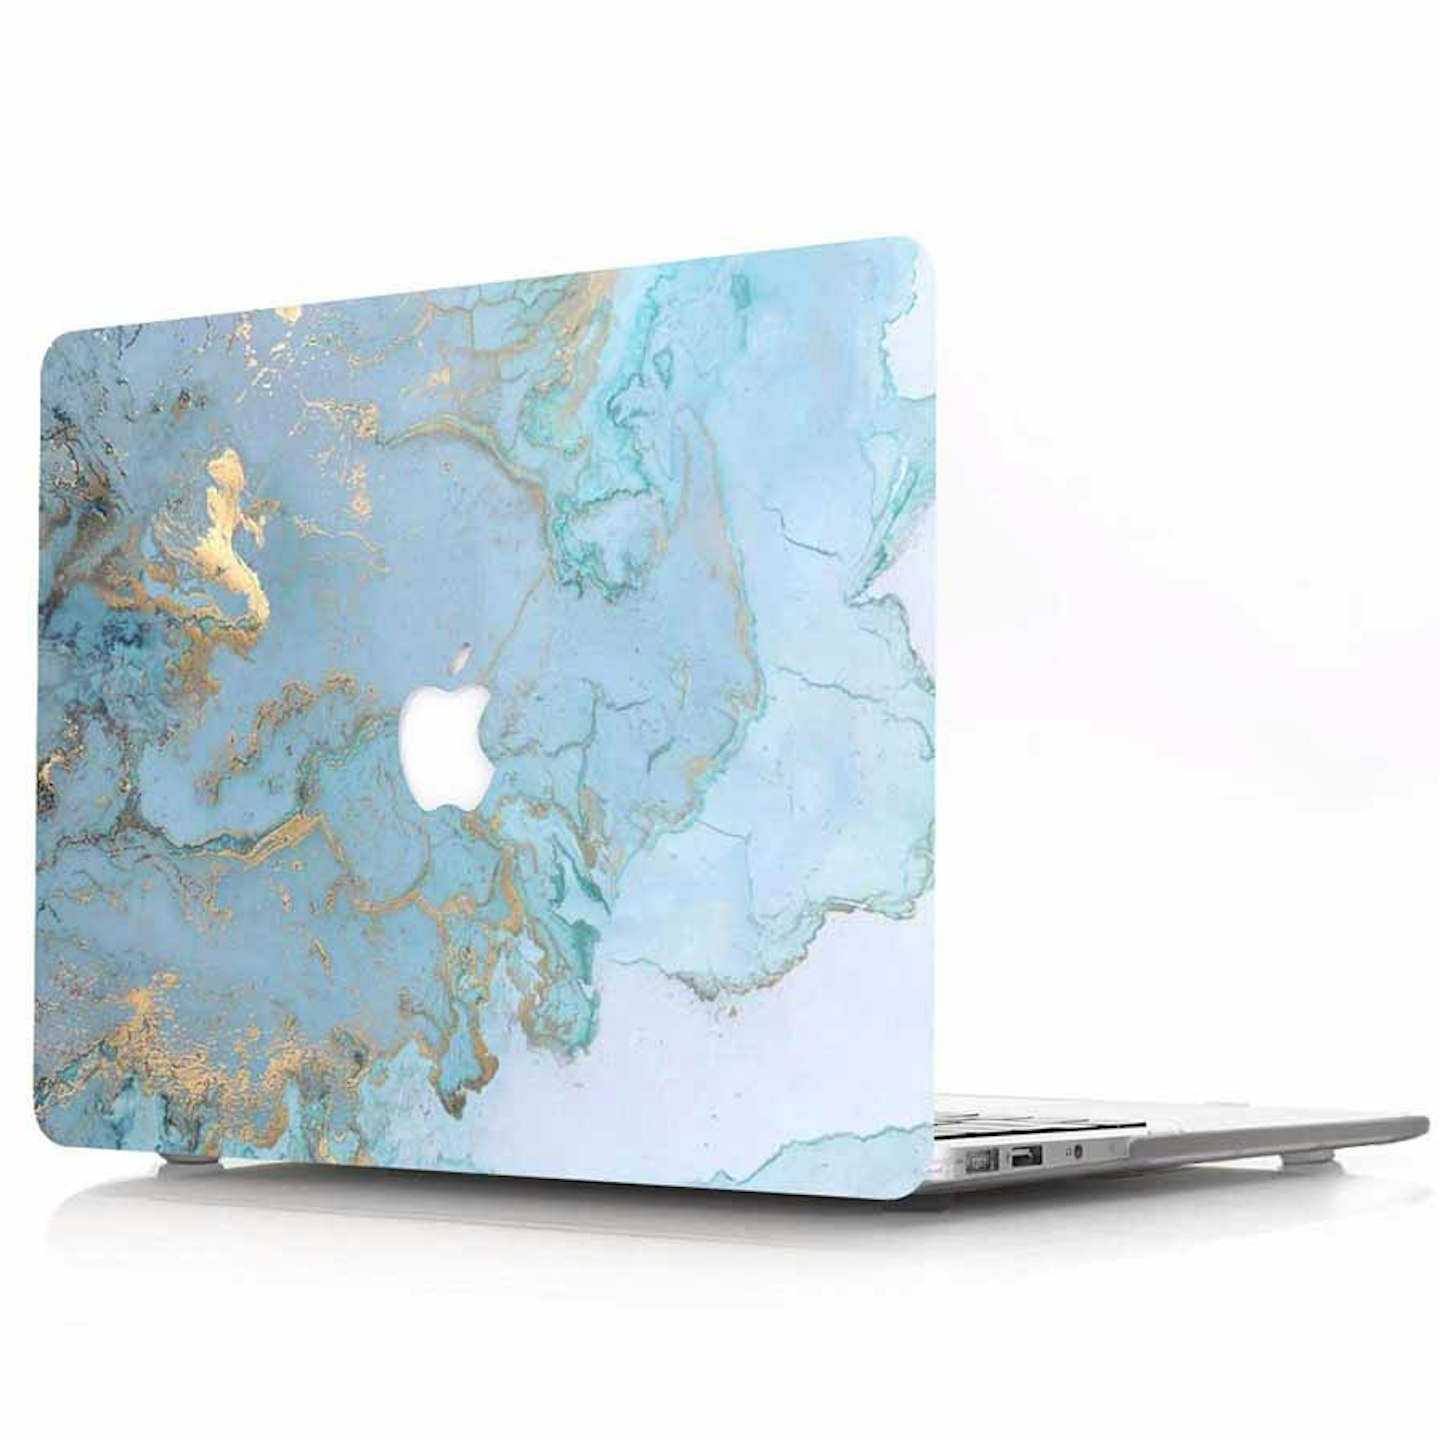 AQYLQ MacBook Air 13 inch Hard Case, £14.29